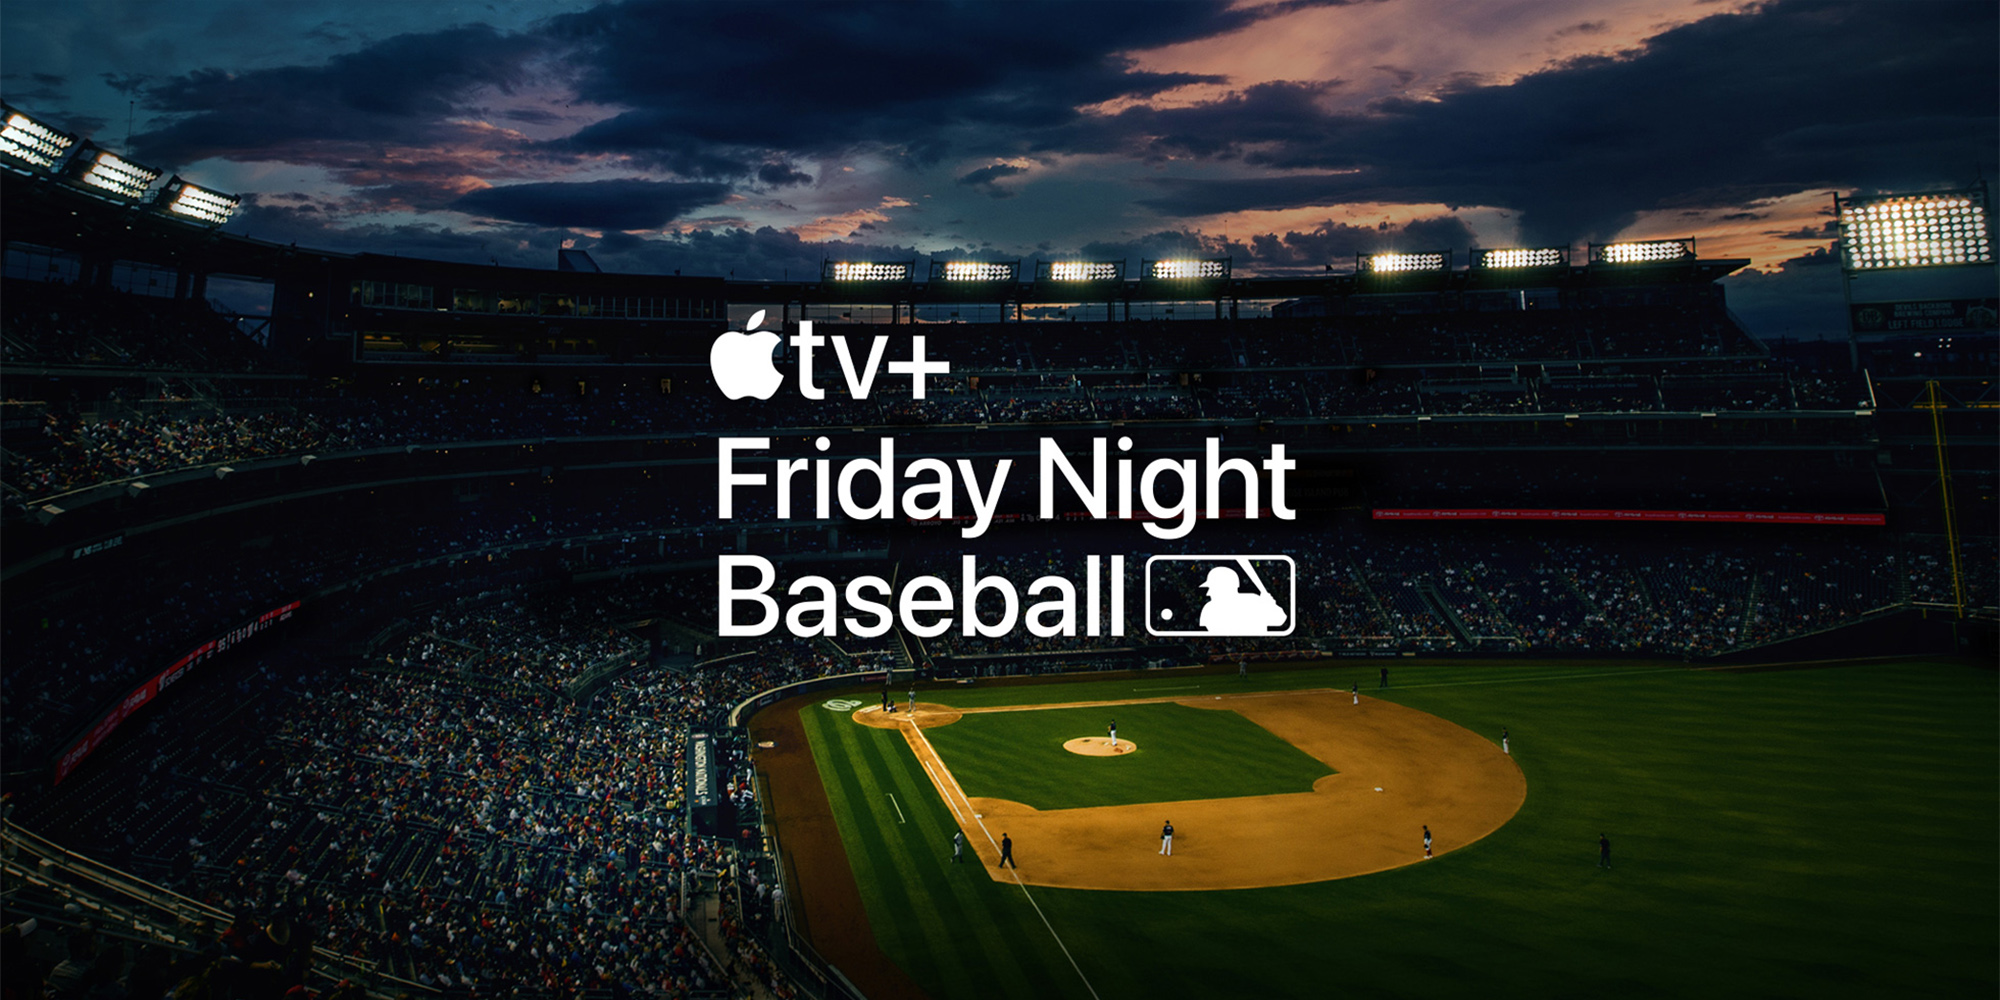 MLB talks TV+ Apple reaches into every single home